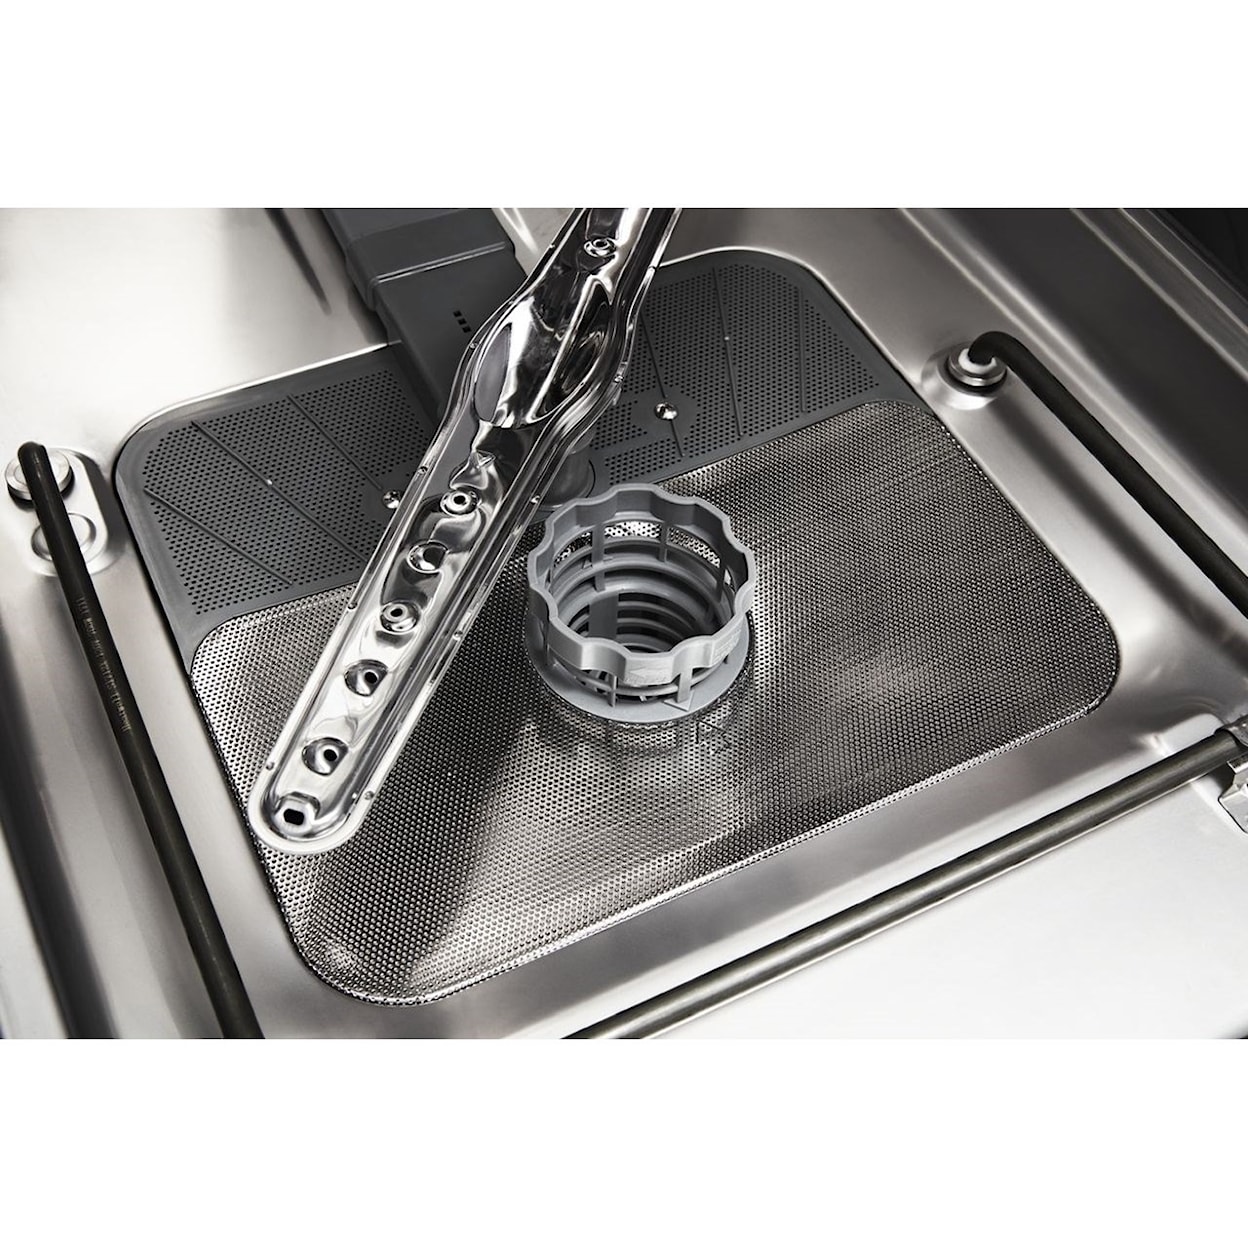 Whirlpool Dishwashers - Whirlpool Small-Space Compact Dishwasher